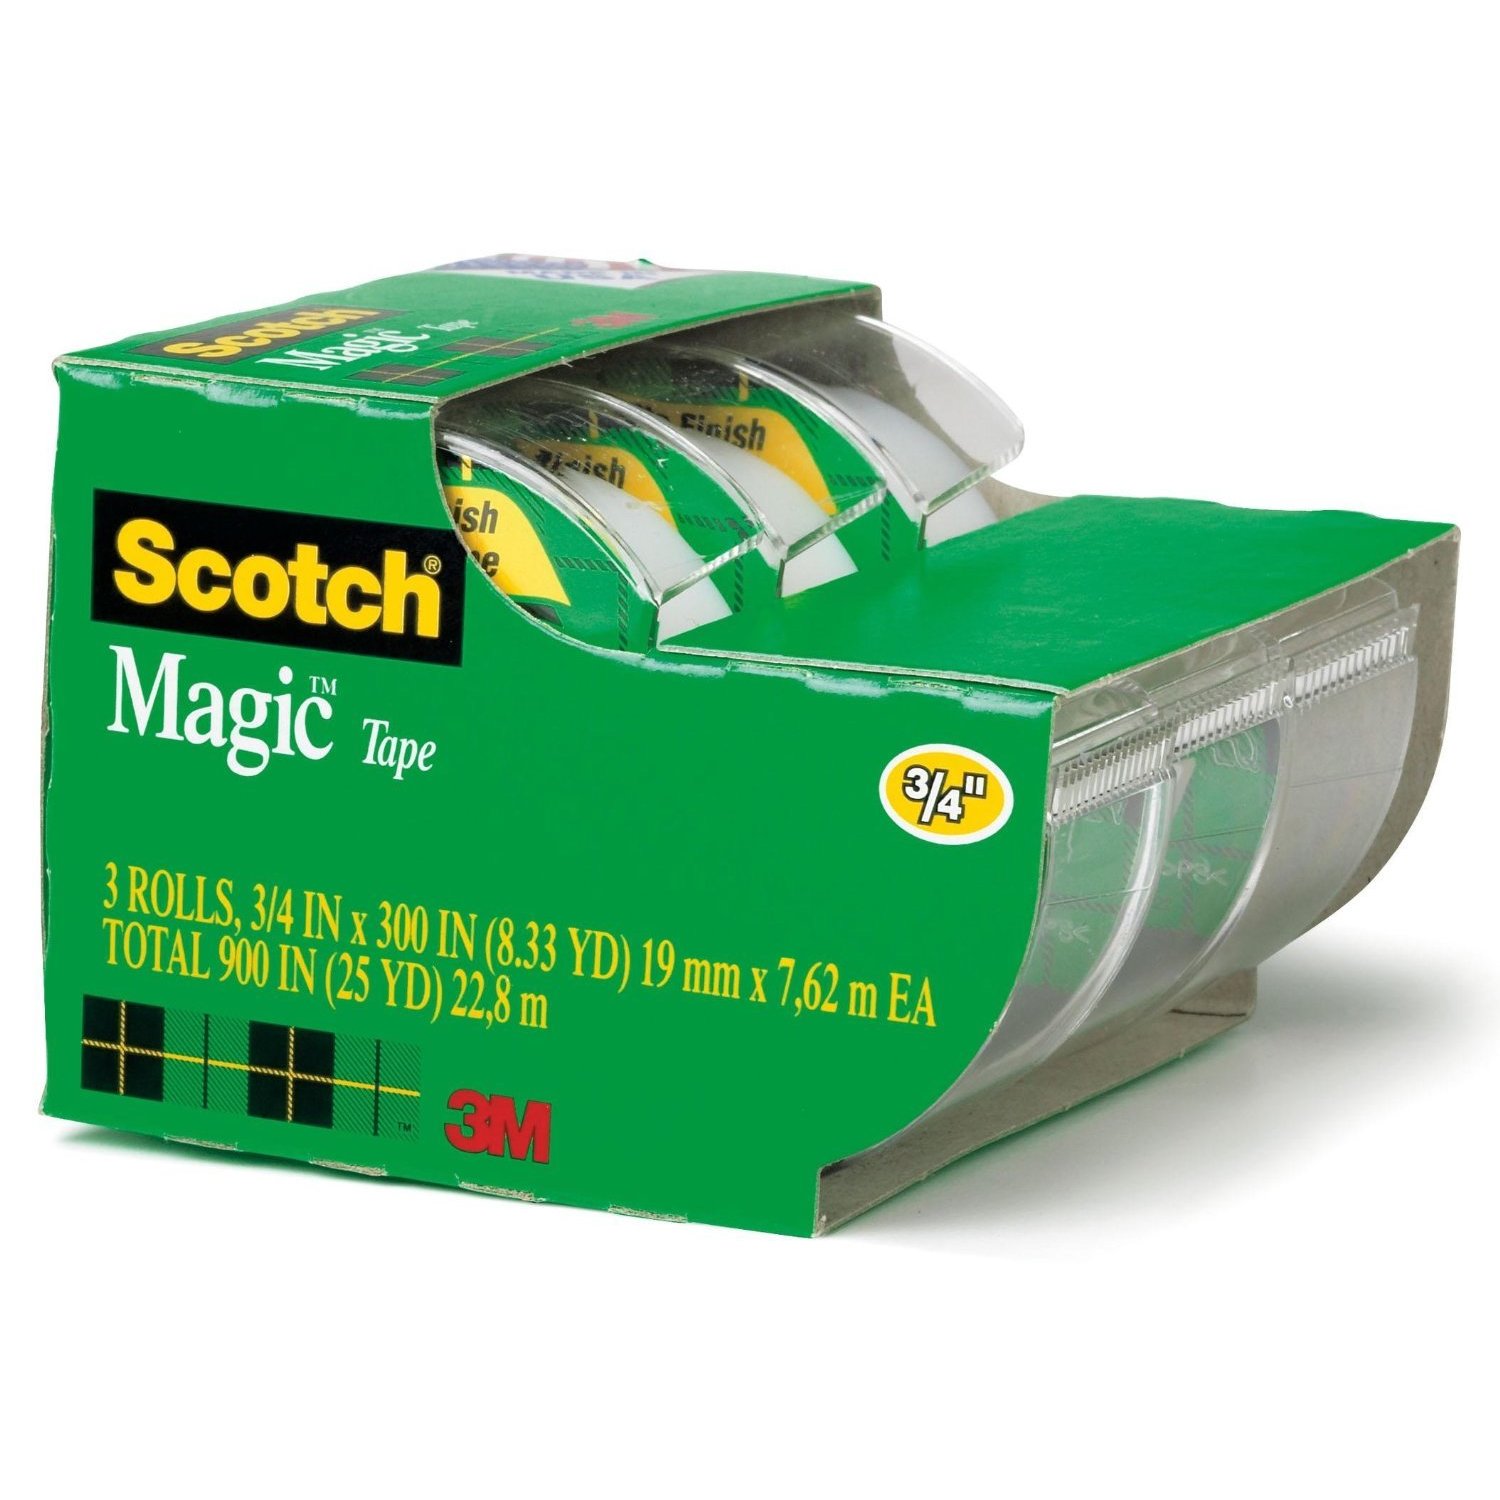 Scotch Magic Tape in Refillable Dispensers